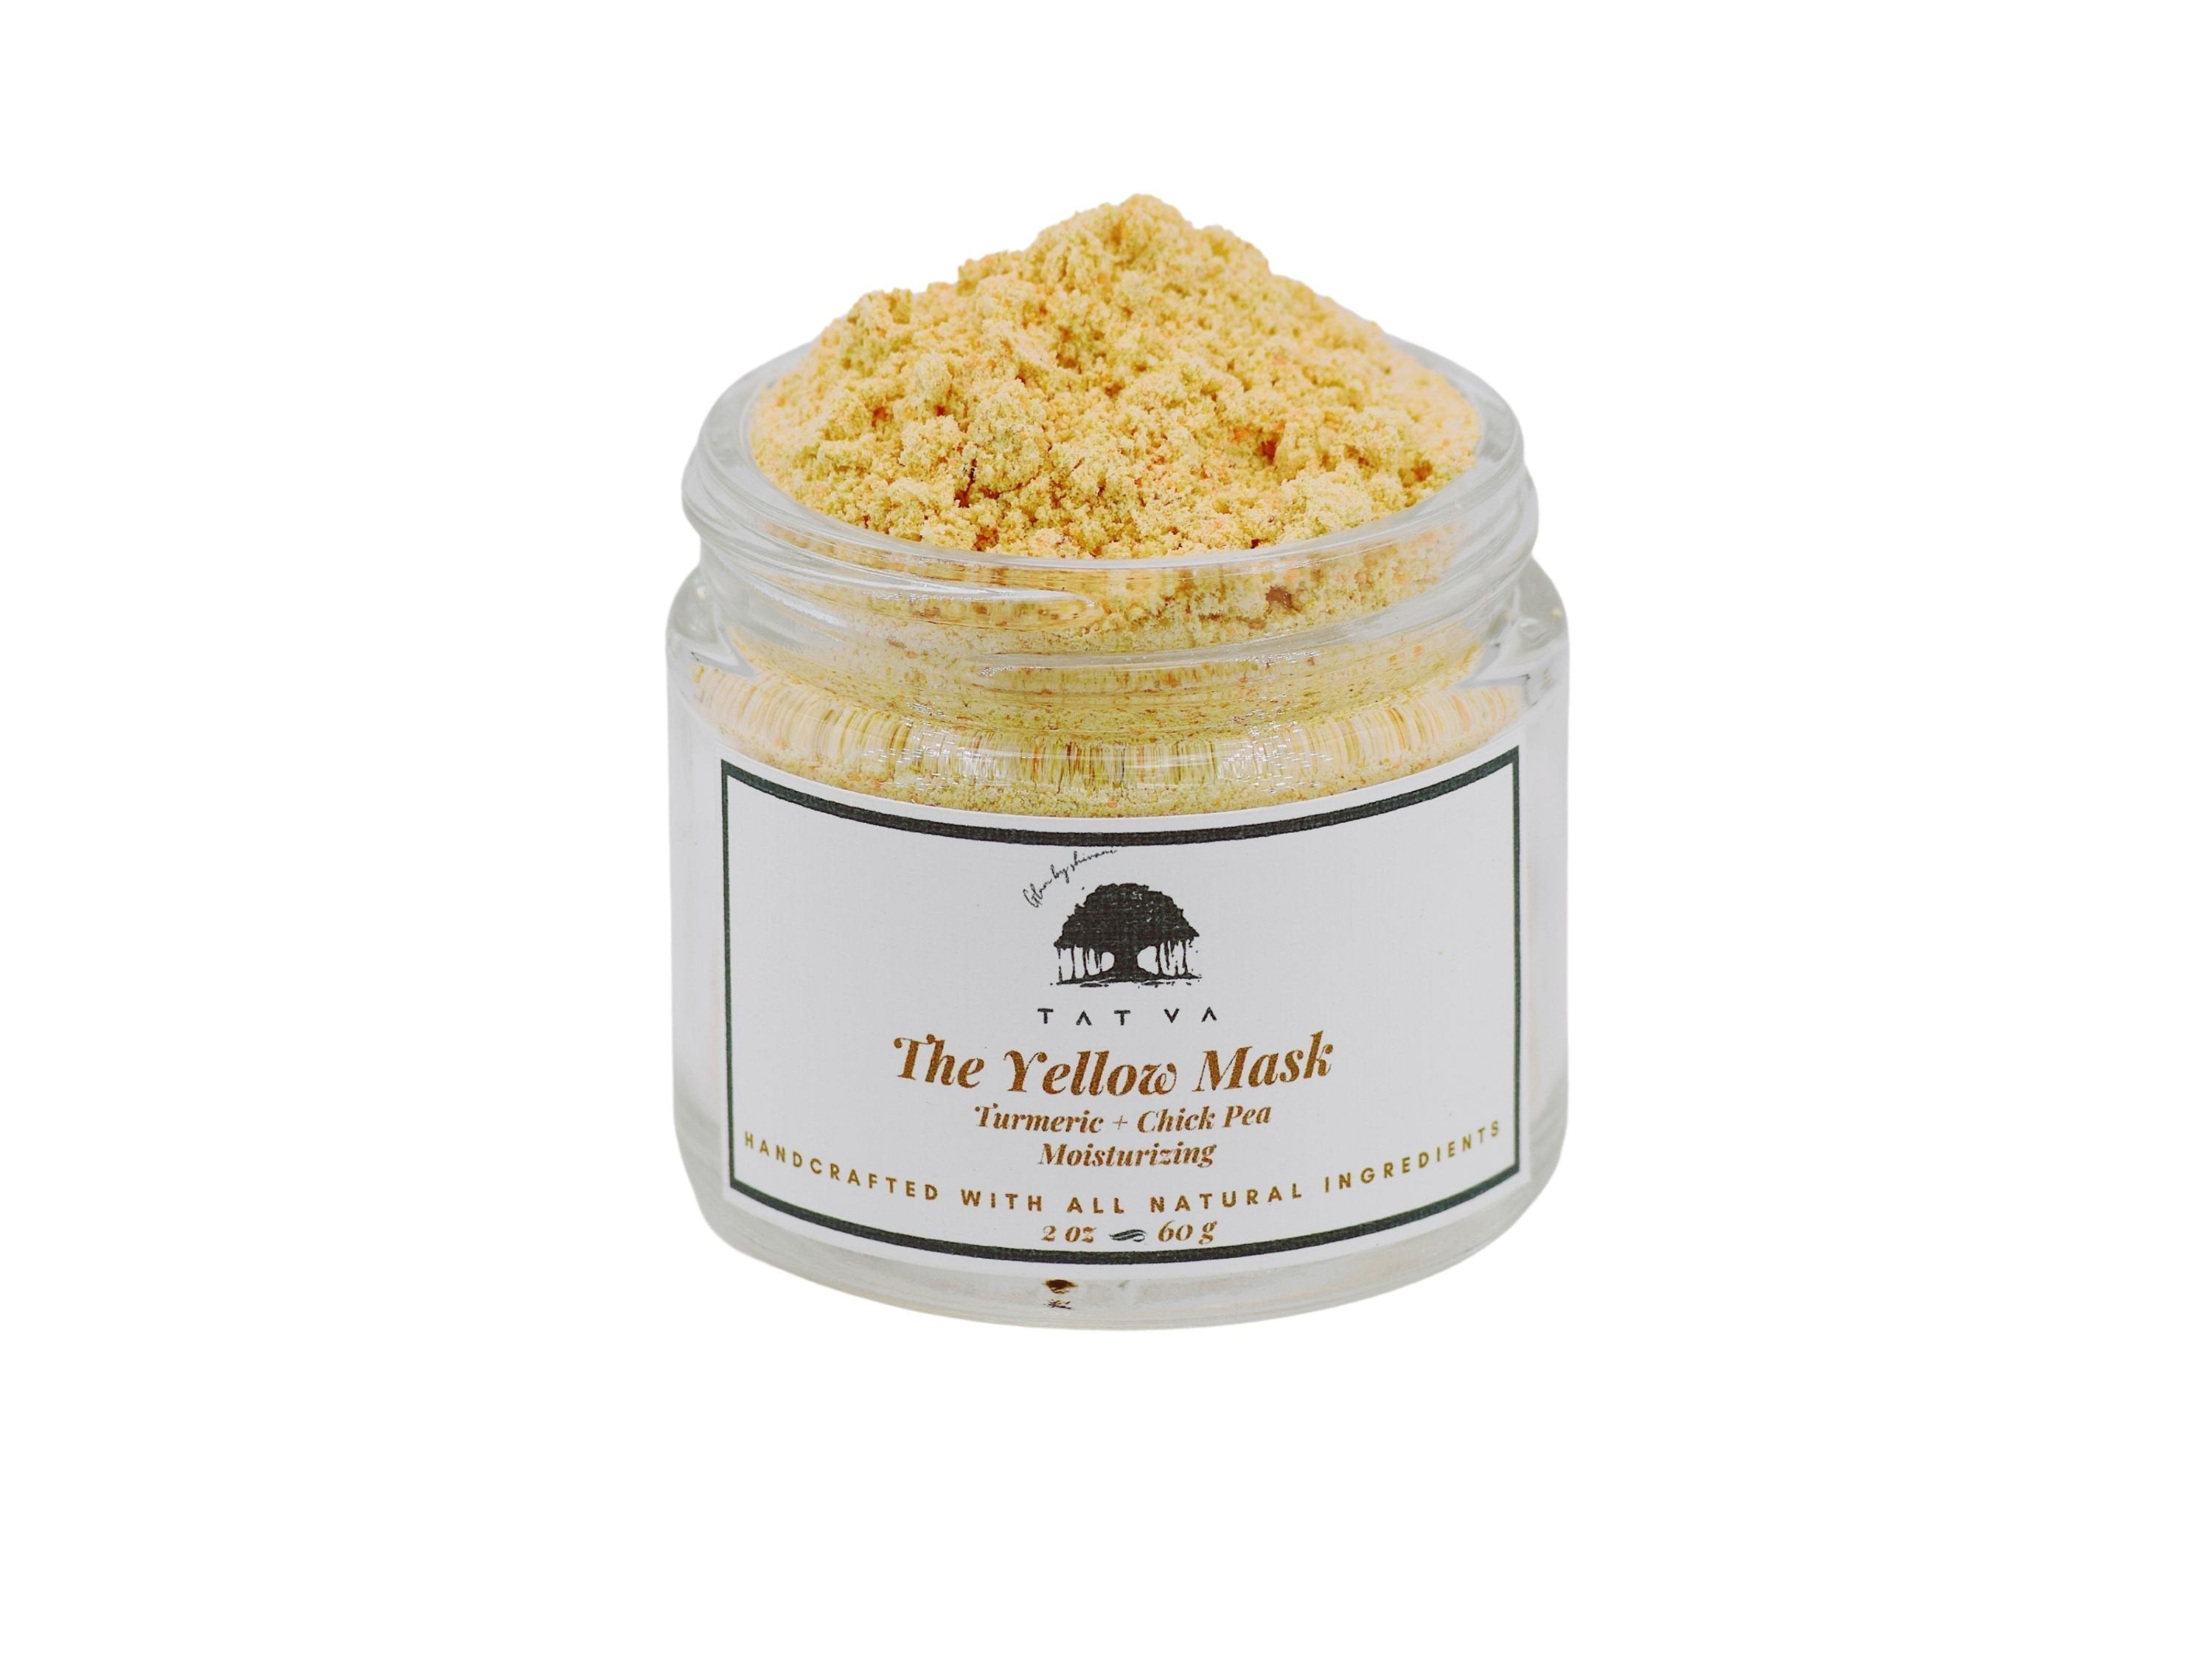 The Yellow Mask - Natural Skincare, Moisturizing face mask